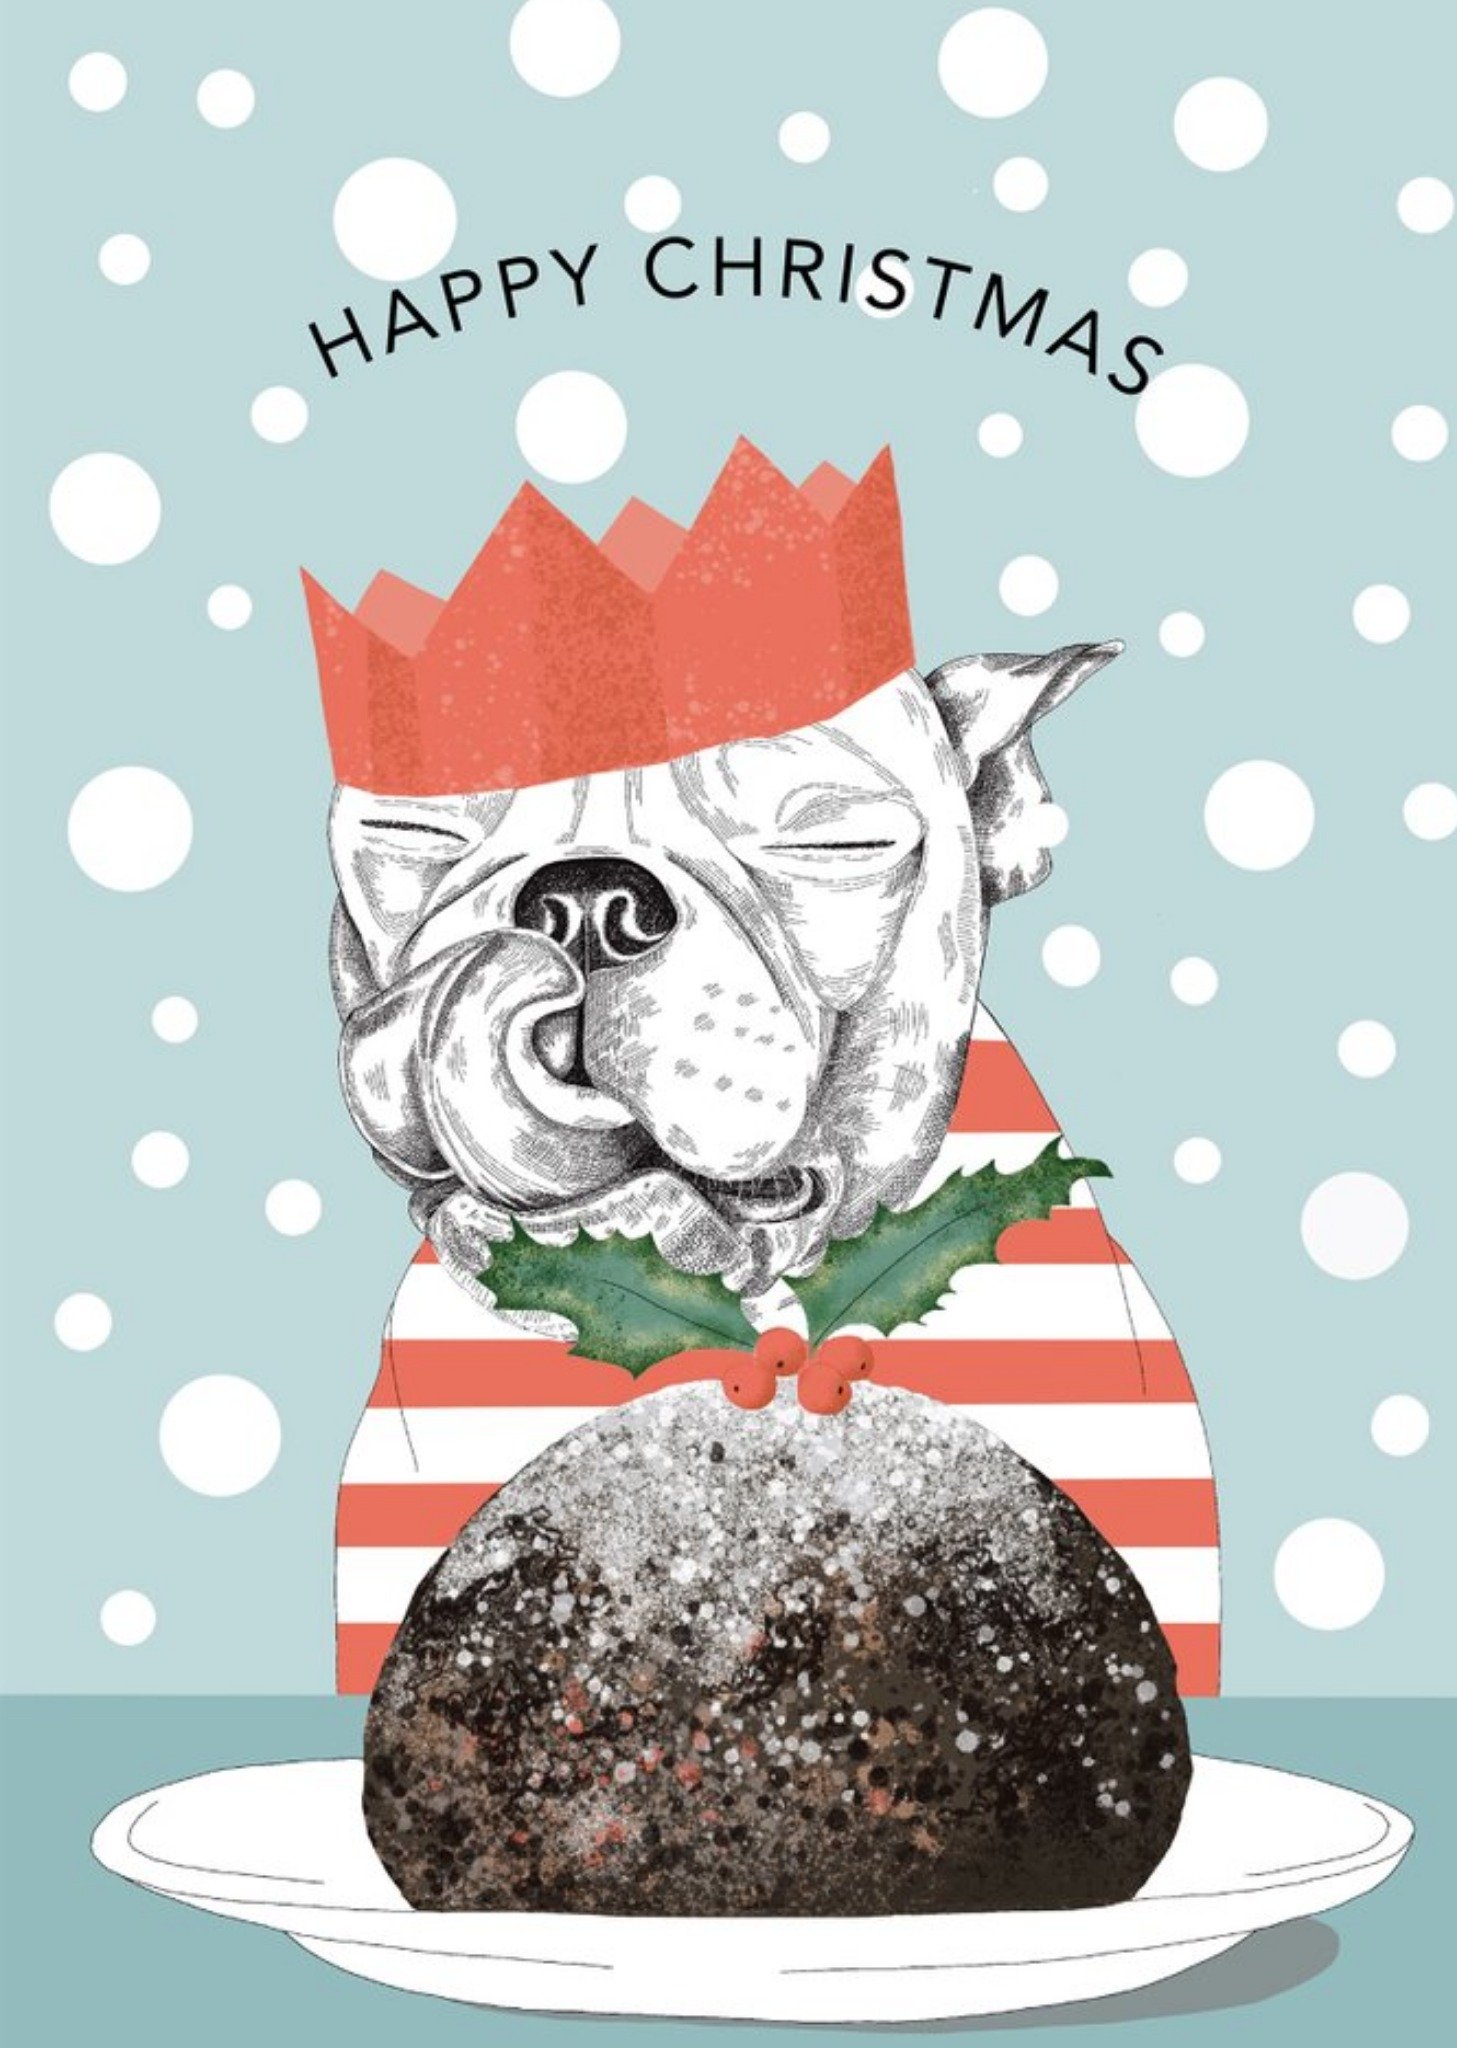 Moonpig Modern Cute Funny Illustration Dog And Christmas Pudding Christmas Card, Large